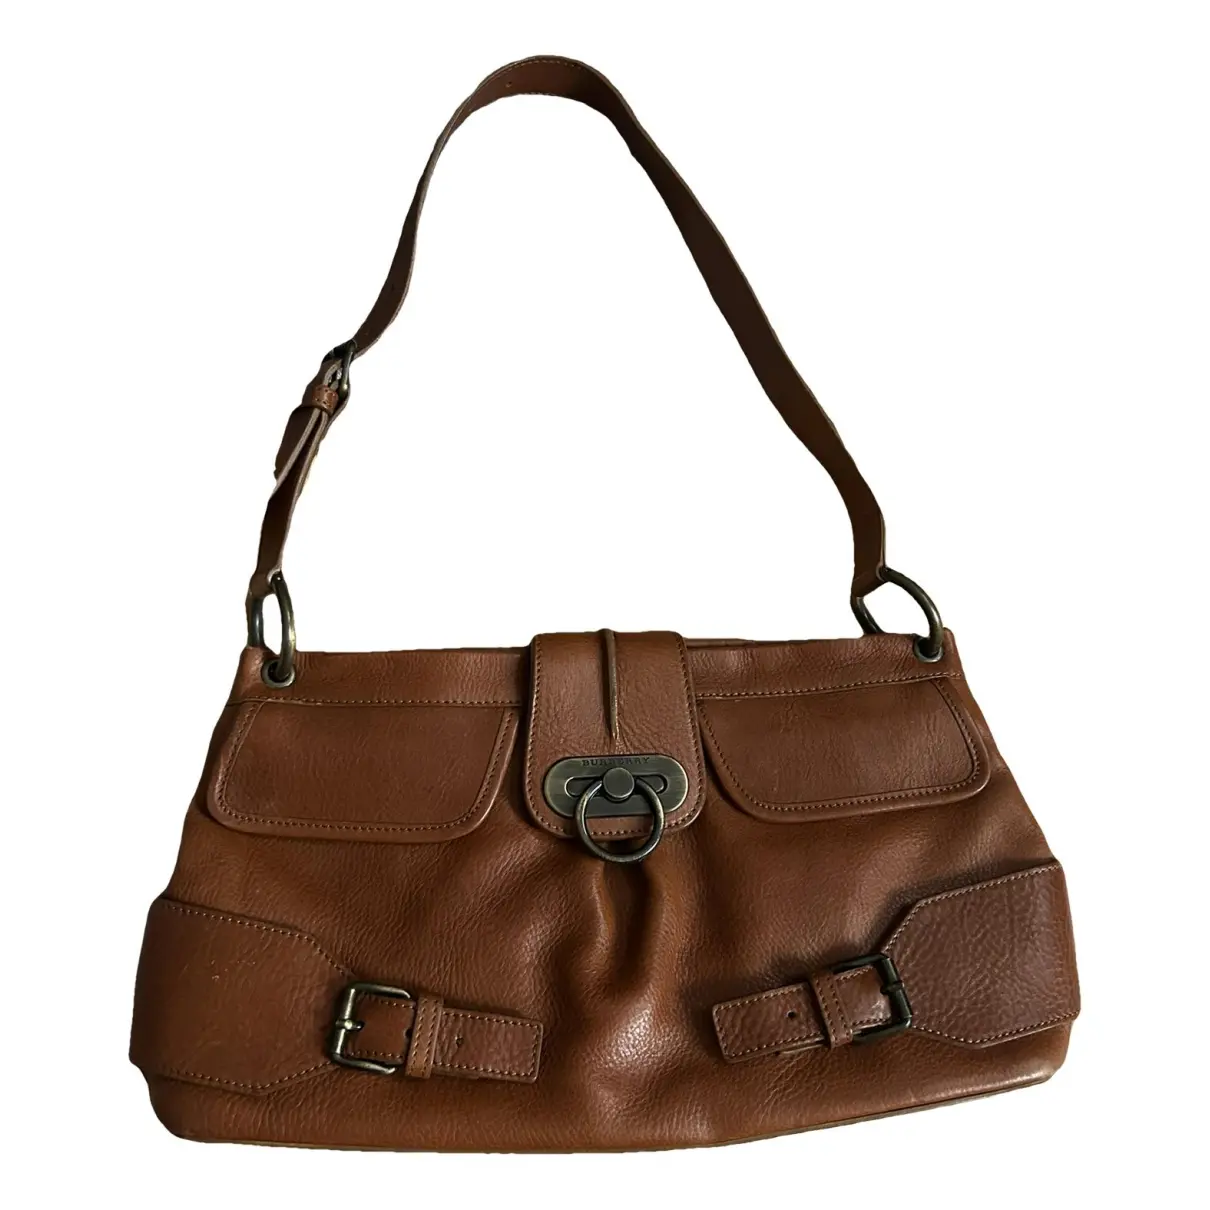 The D-ring leather handbag